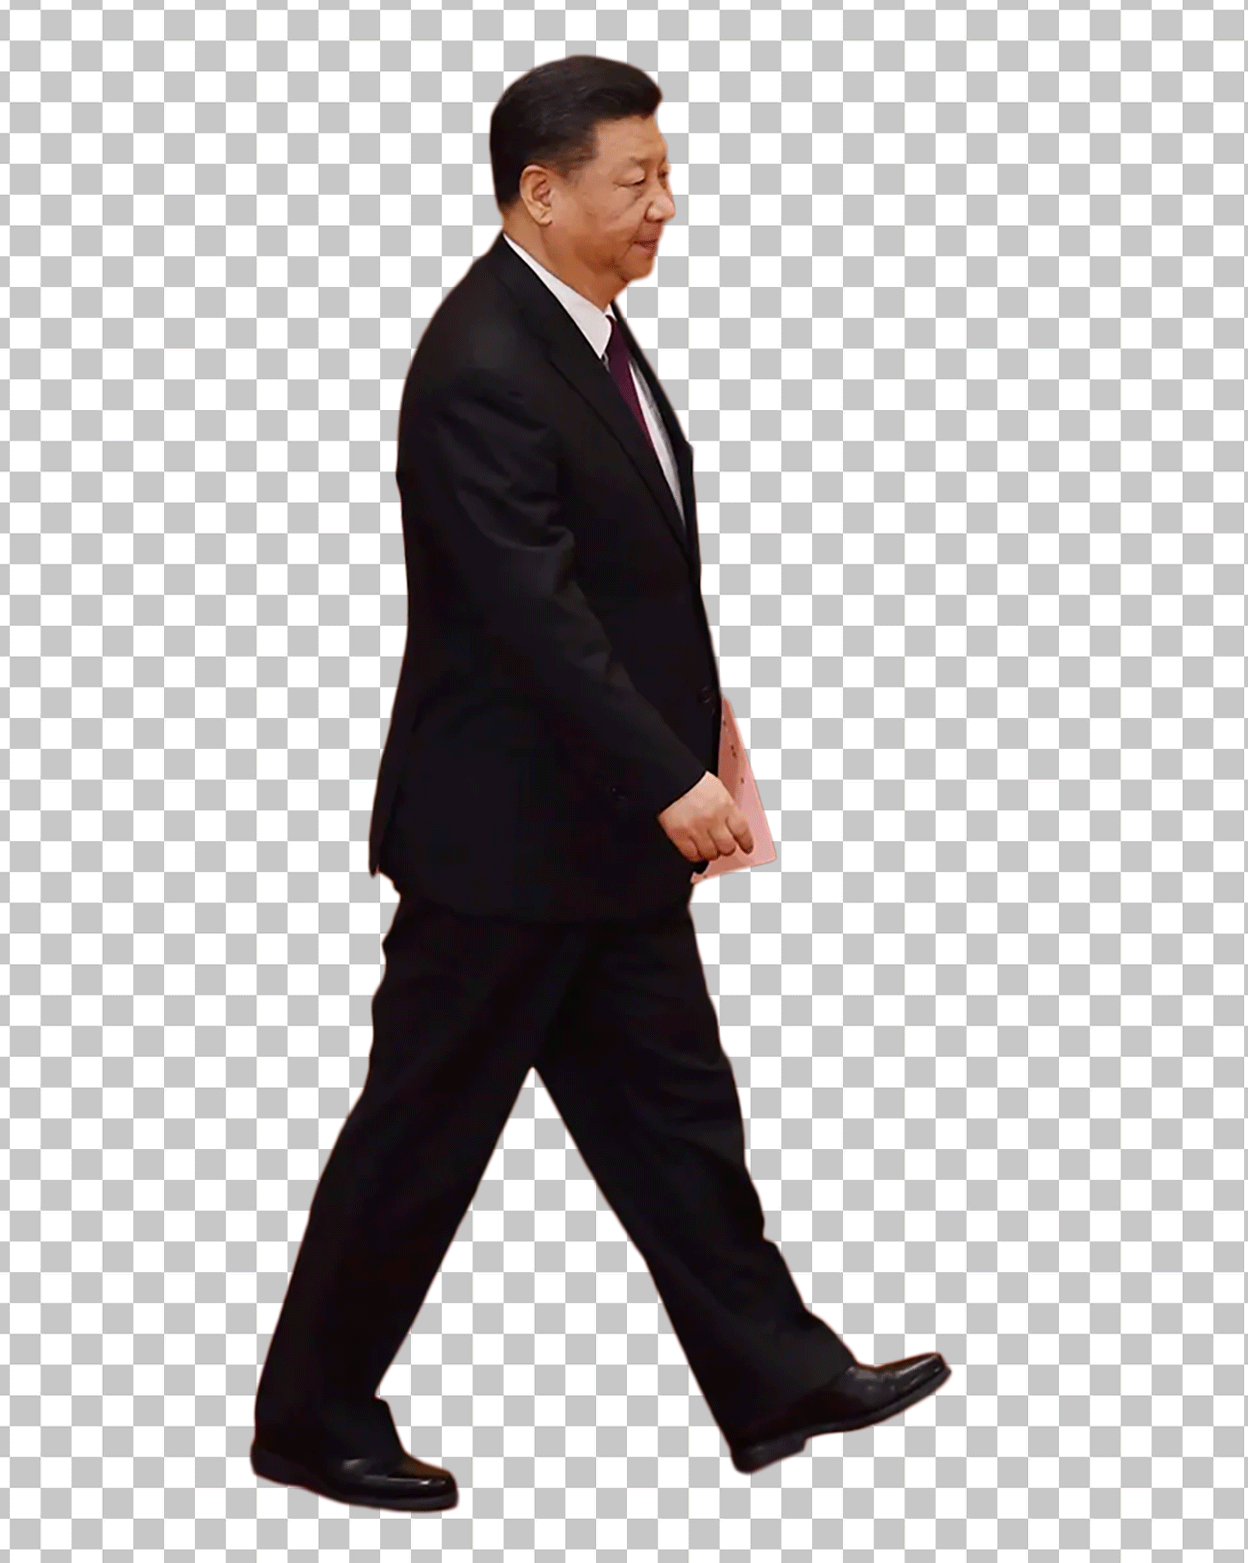 Xi Jinping walking in suit PNG Image.